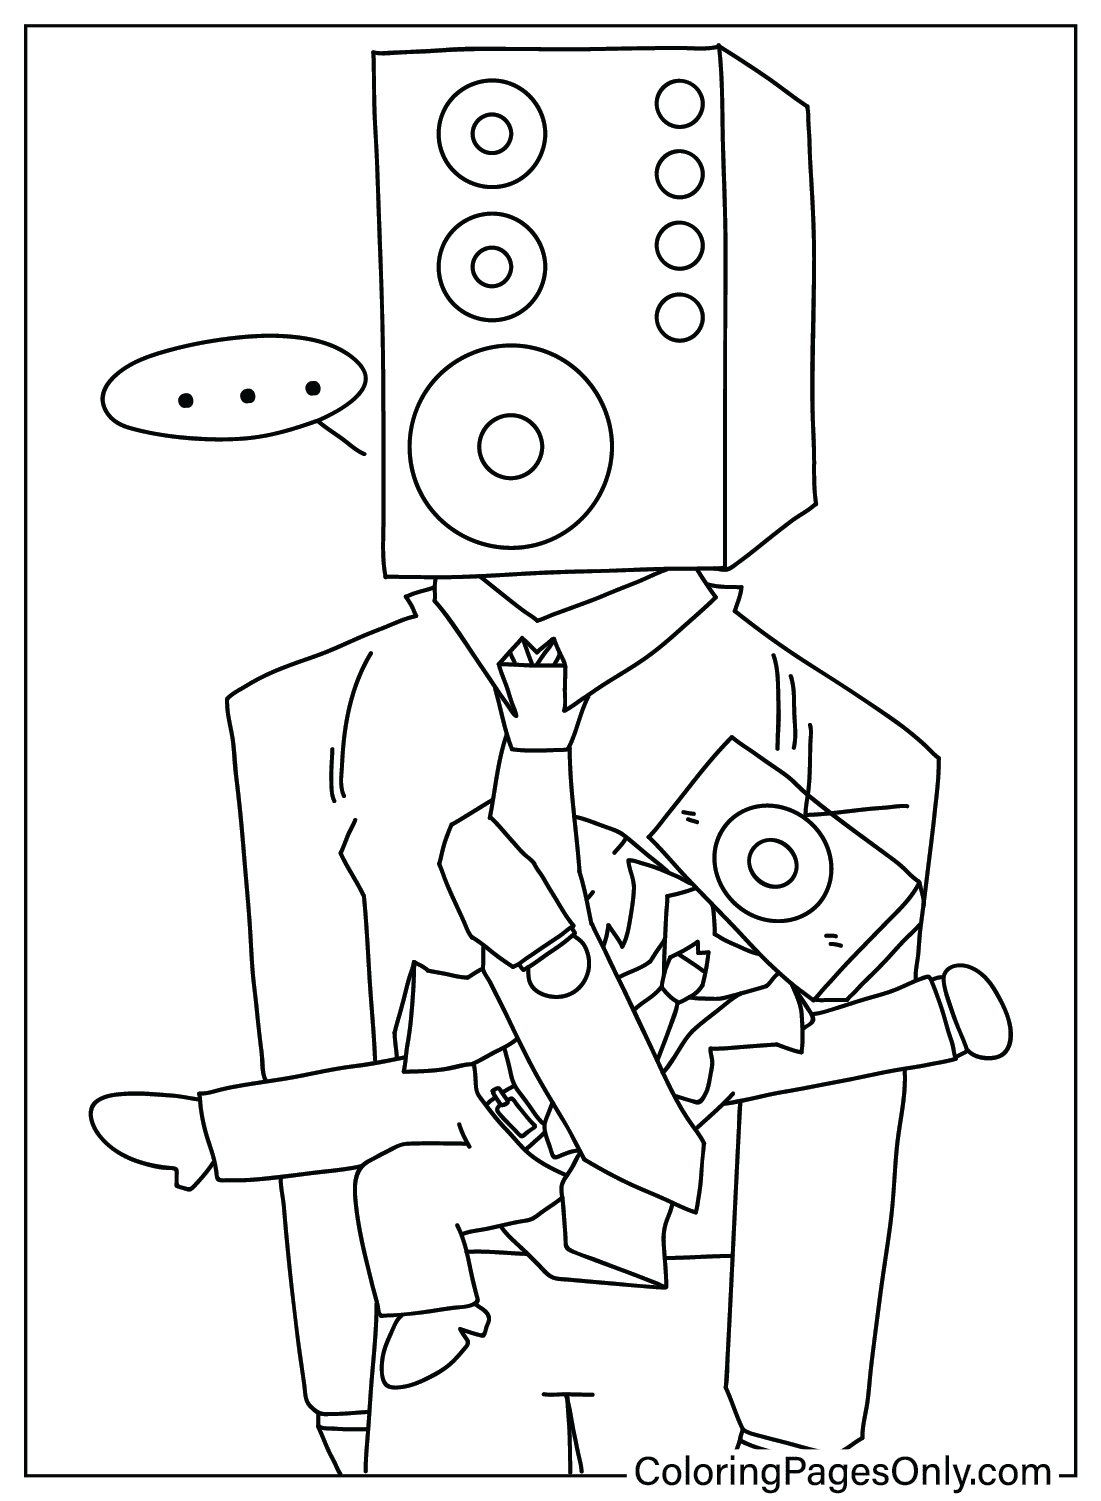 Big Speakerman, Página en color de Speakerman de Big Speakerman